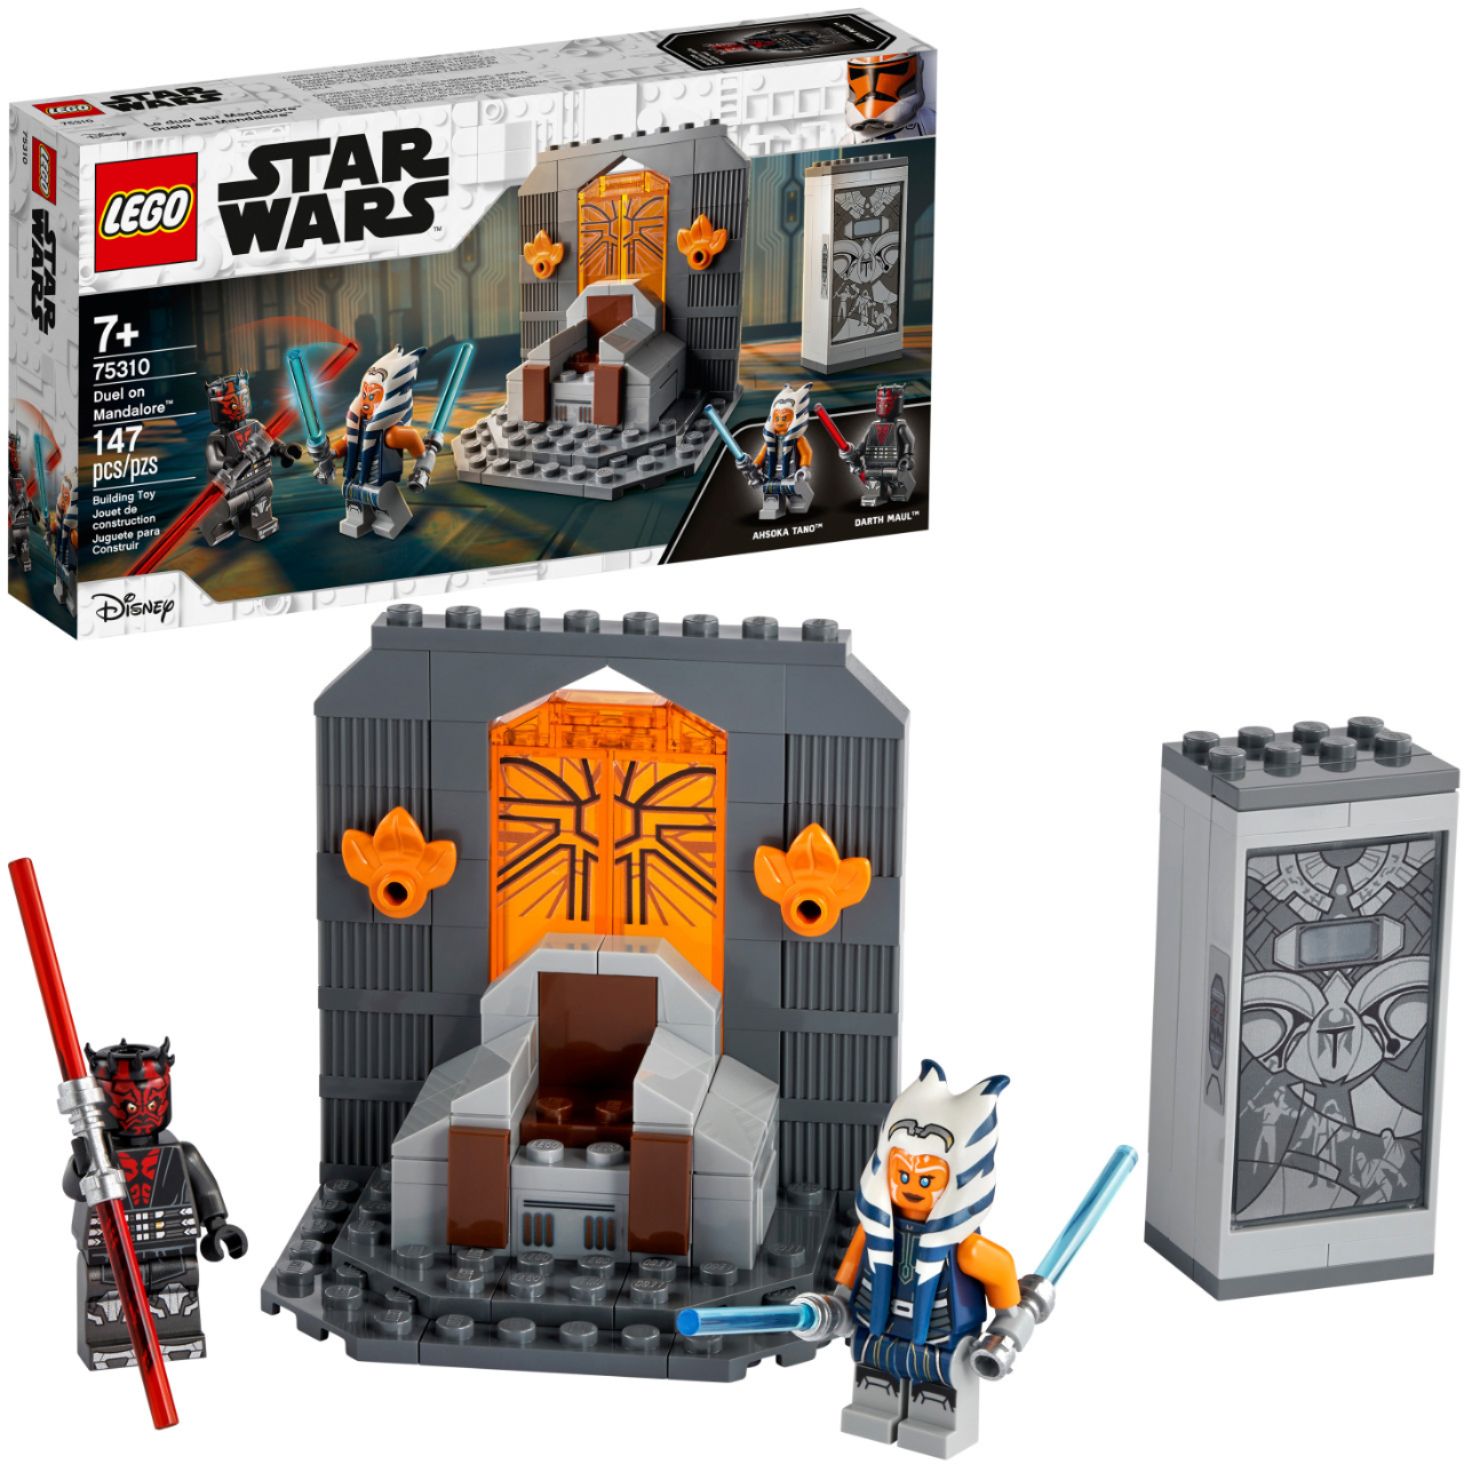 LEGO Wars Duel Mandalore 75310 6332987 - Buy